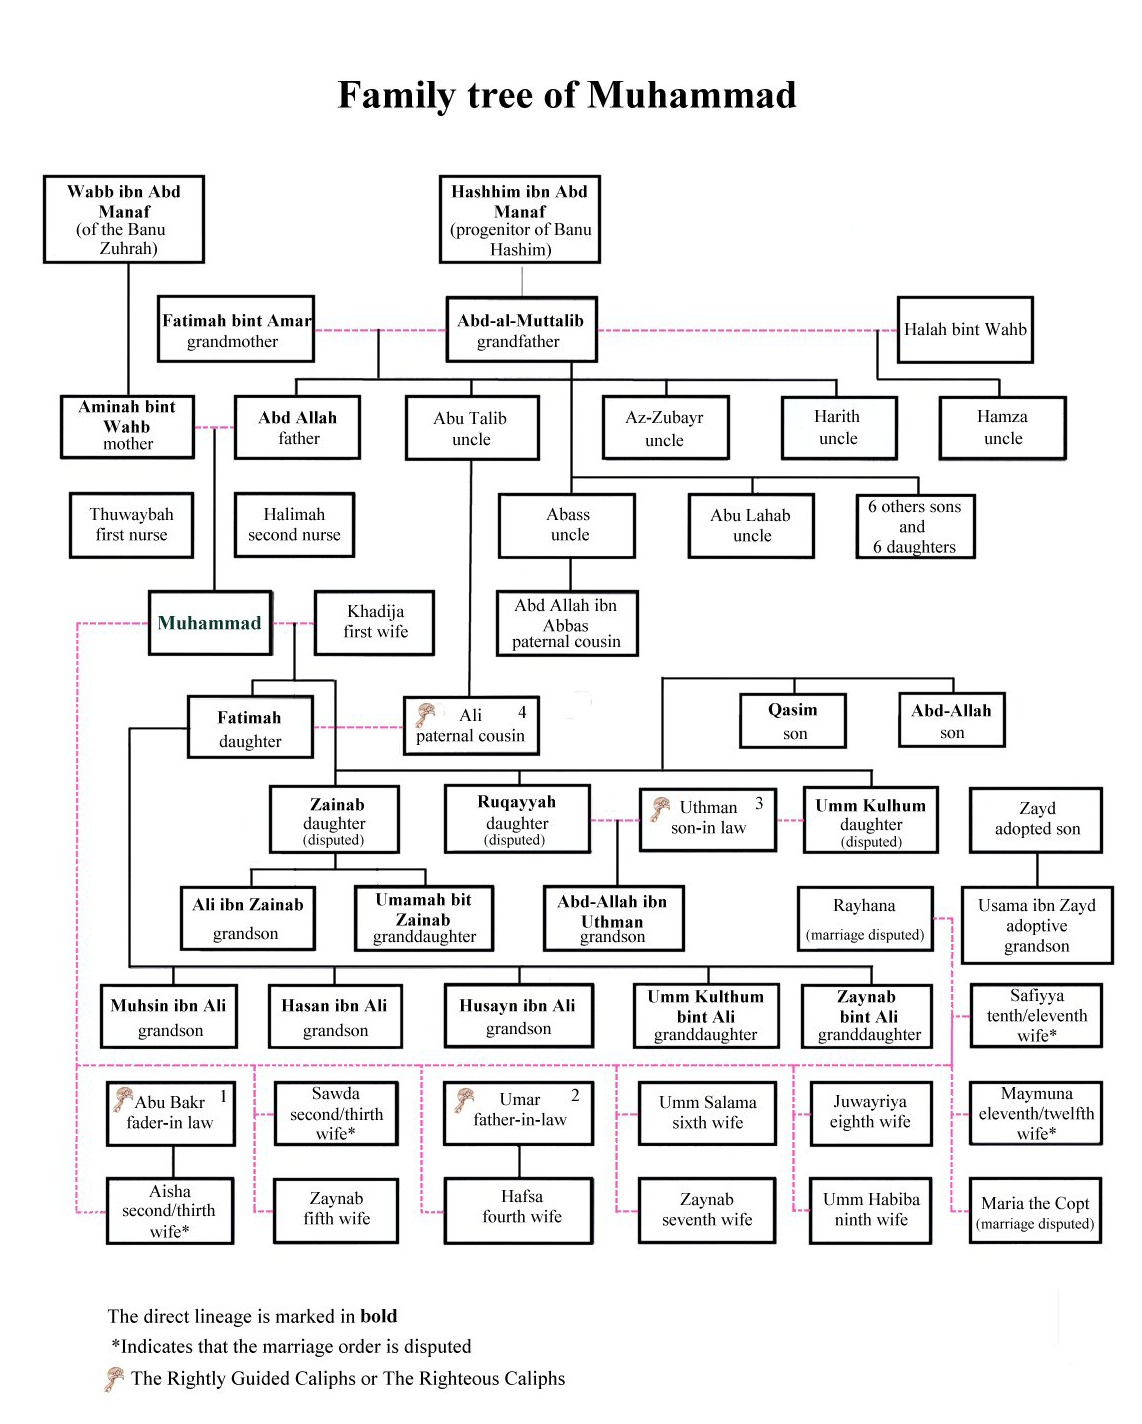 Family Tree of the Prophet Muhammad